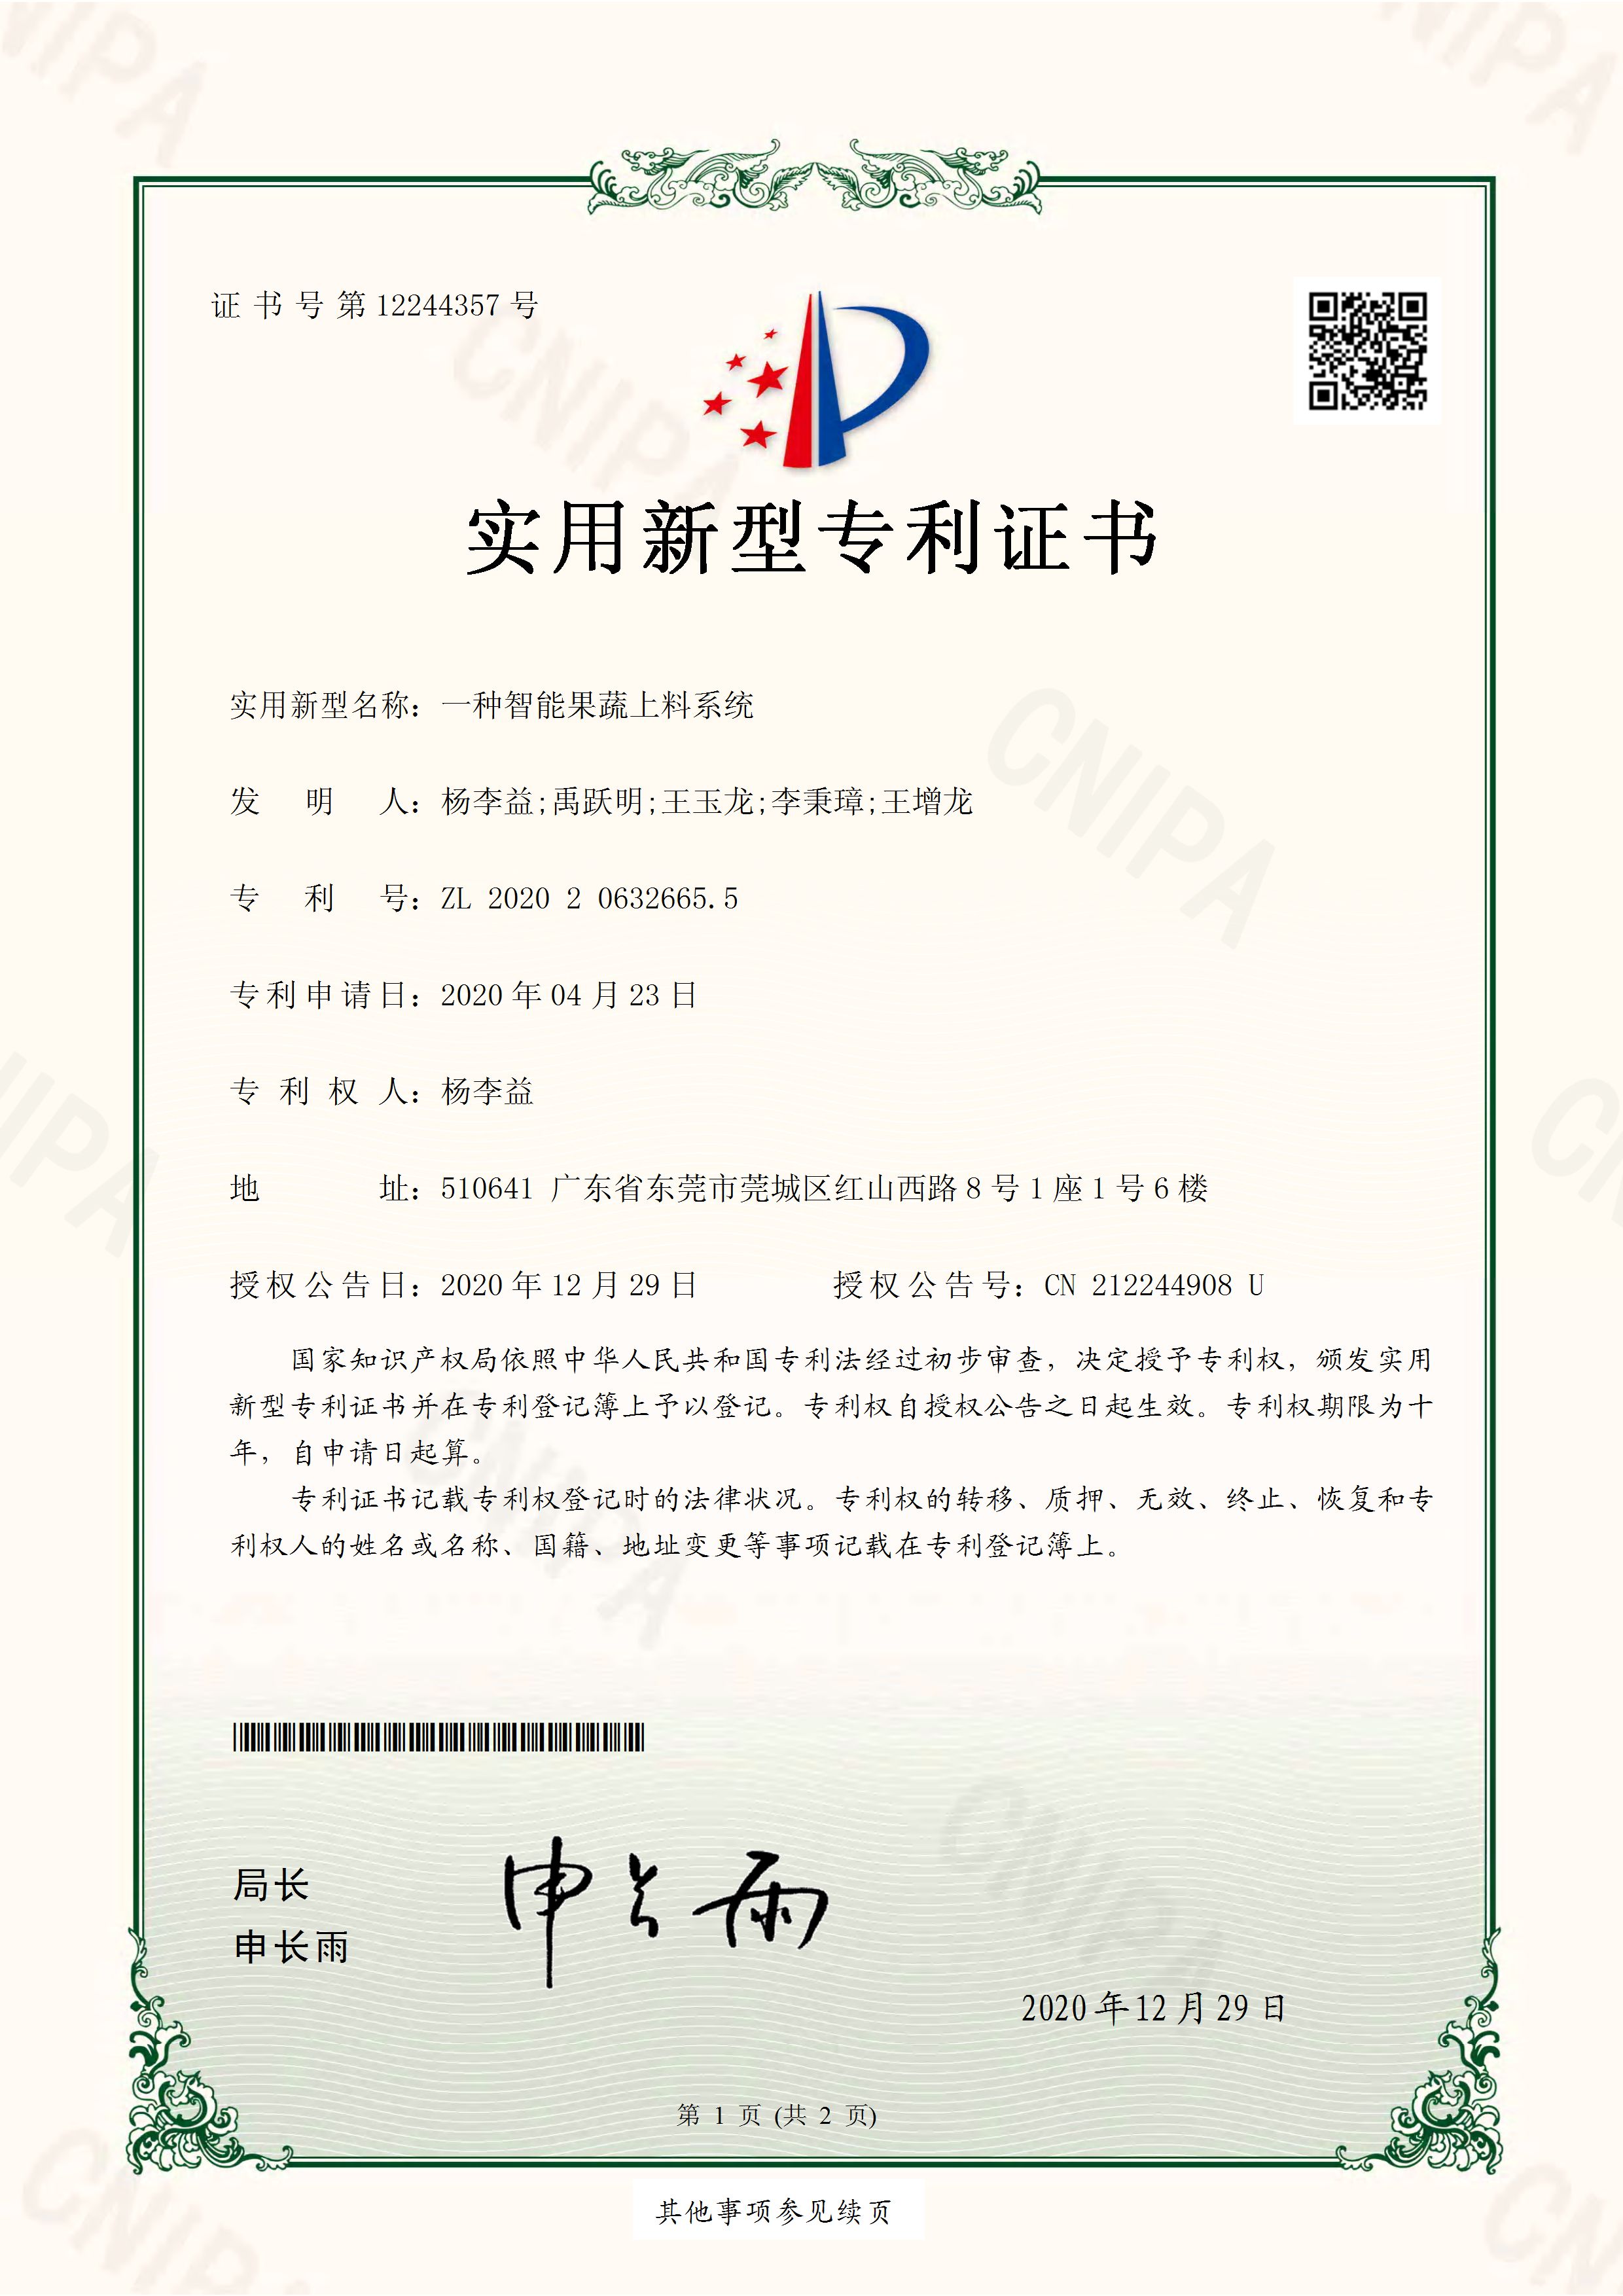 https://gzdaqiao.com/upload/杨李益专利之56——一种智能果蔬上料系统